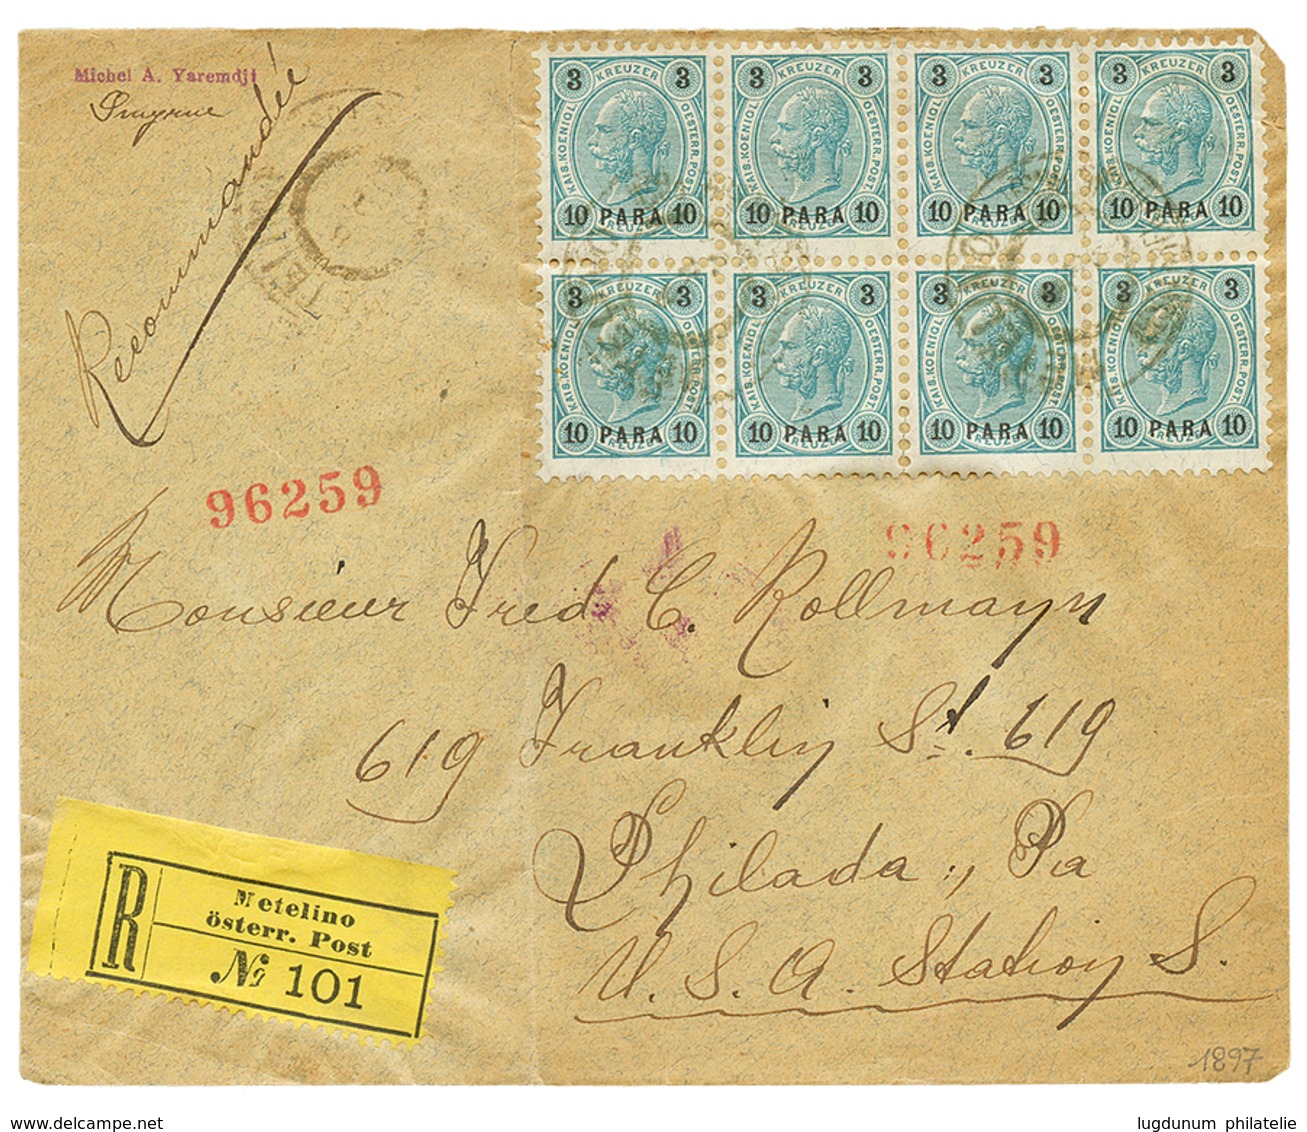 METELINE : 1897 10p Bloc Of 8 Canc. METELINO On REGISTERED Envelope To PHILADELPHIA (USA). Scarce. Vf. - Eastern Austria